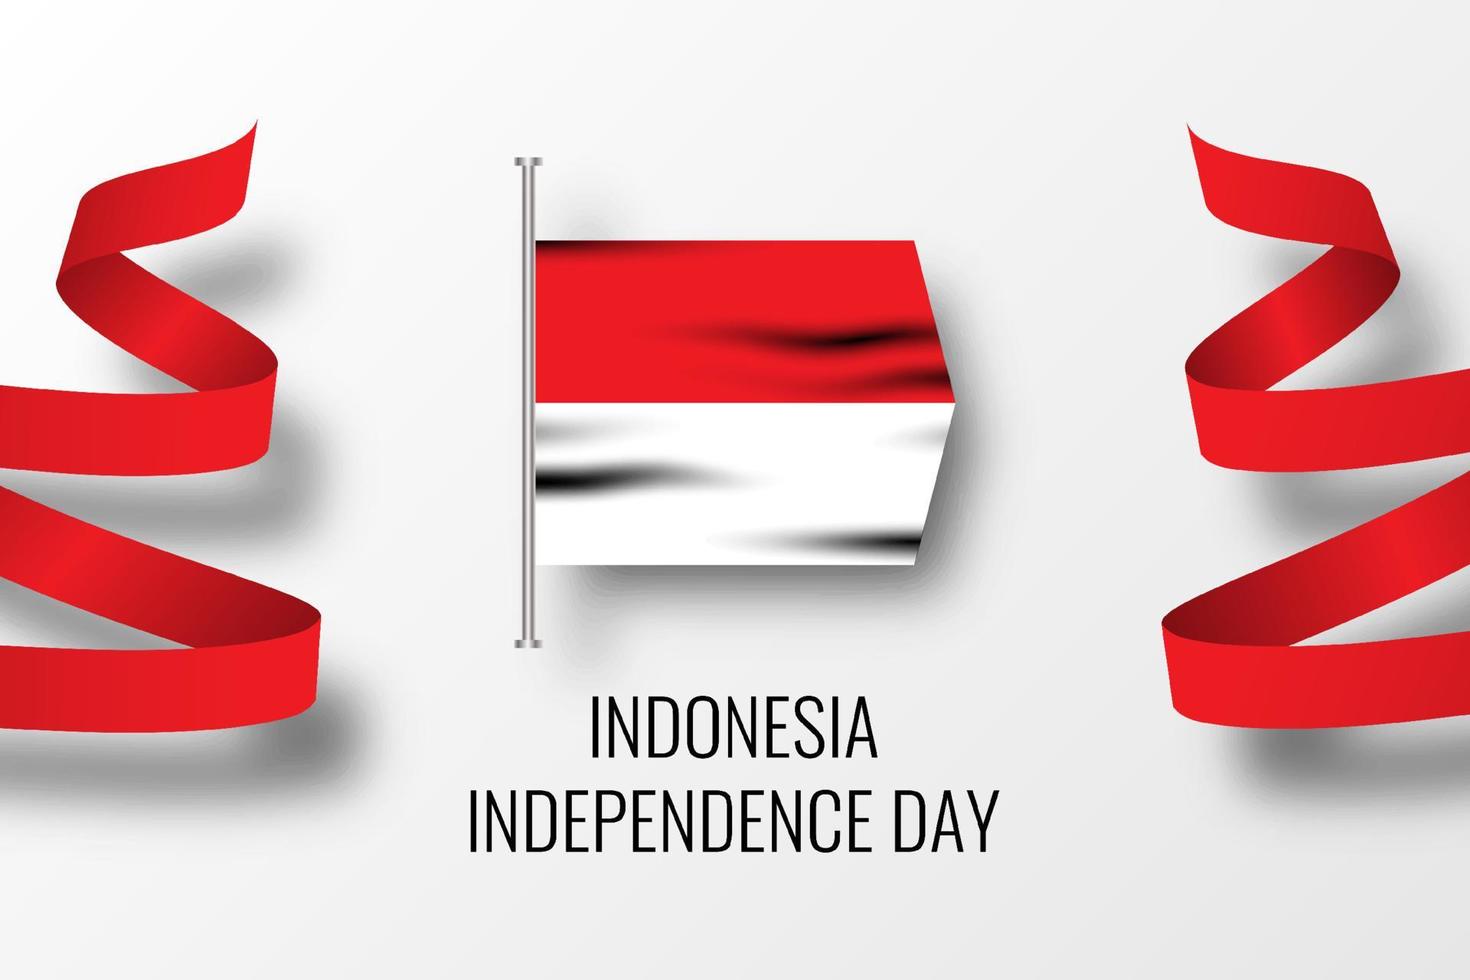 Indonesia independence day celebration illustration template design vector